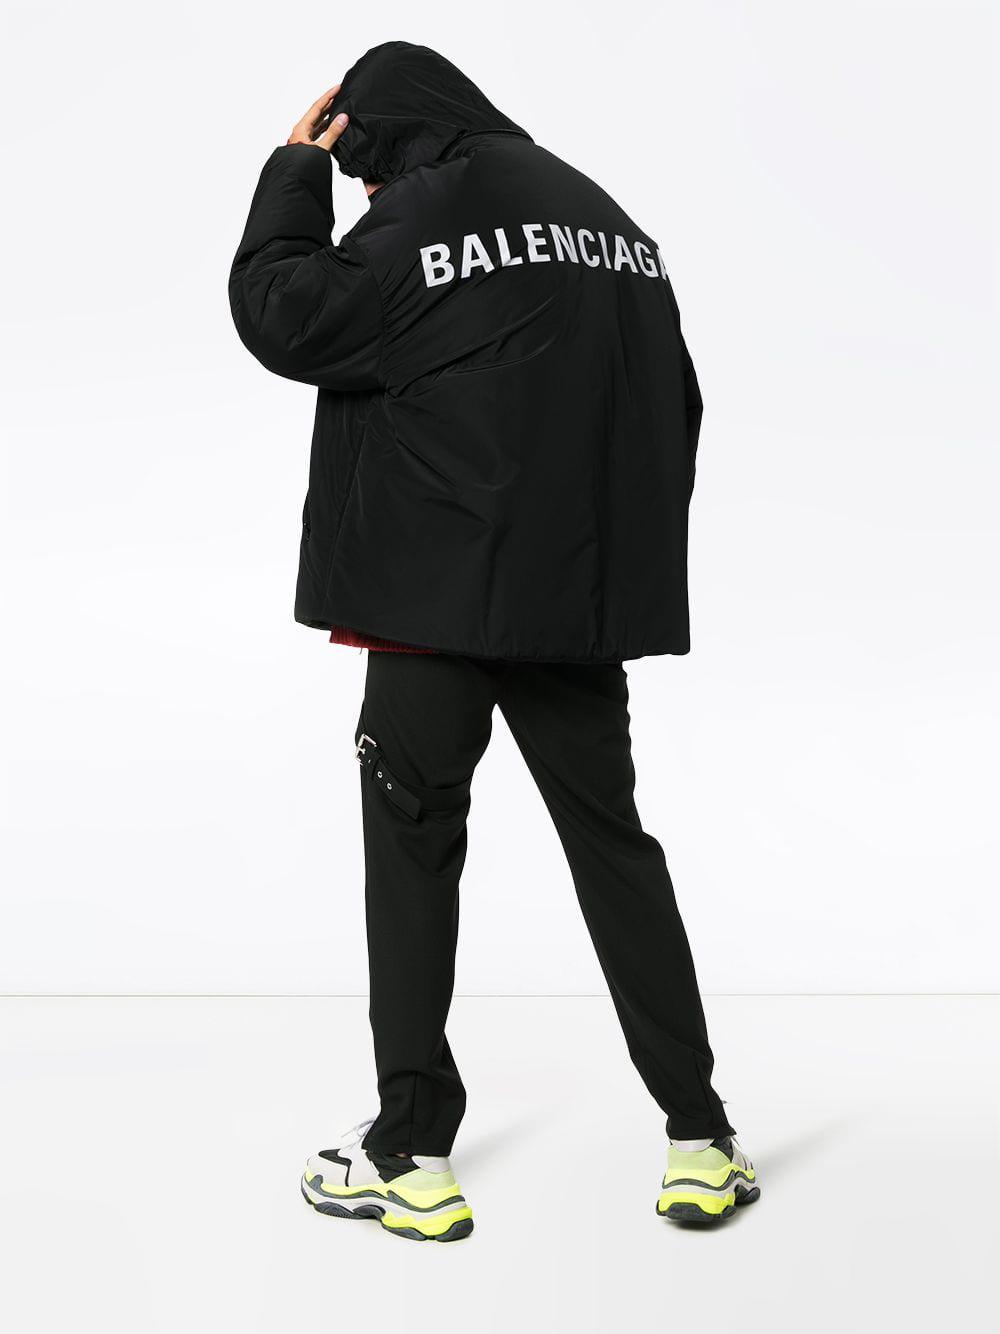 Chi tiết với hơn 52 về balenciaga jacket for men hay nhất   cdgdbentreeduvn